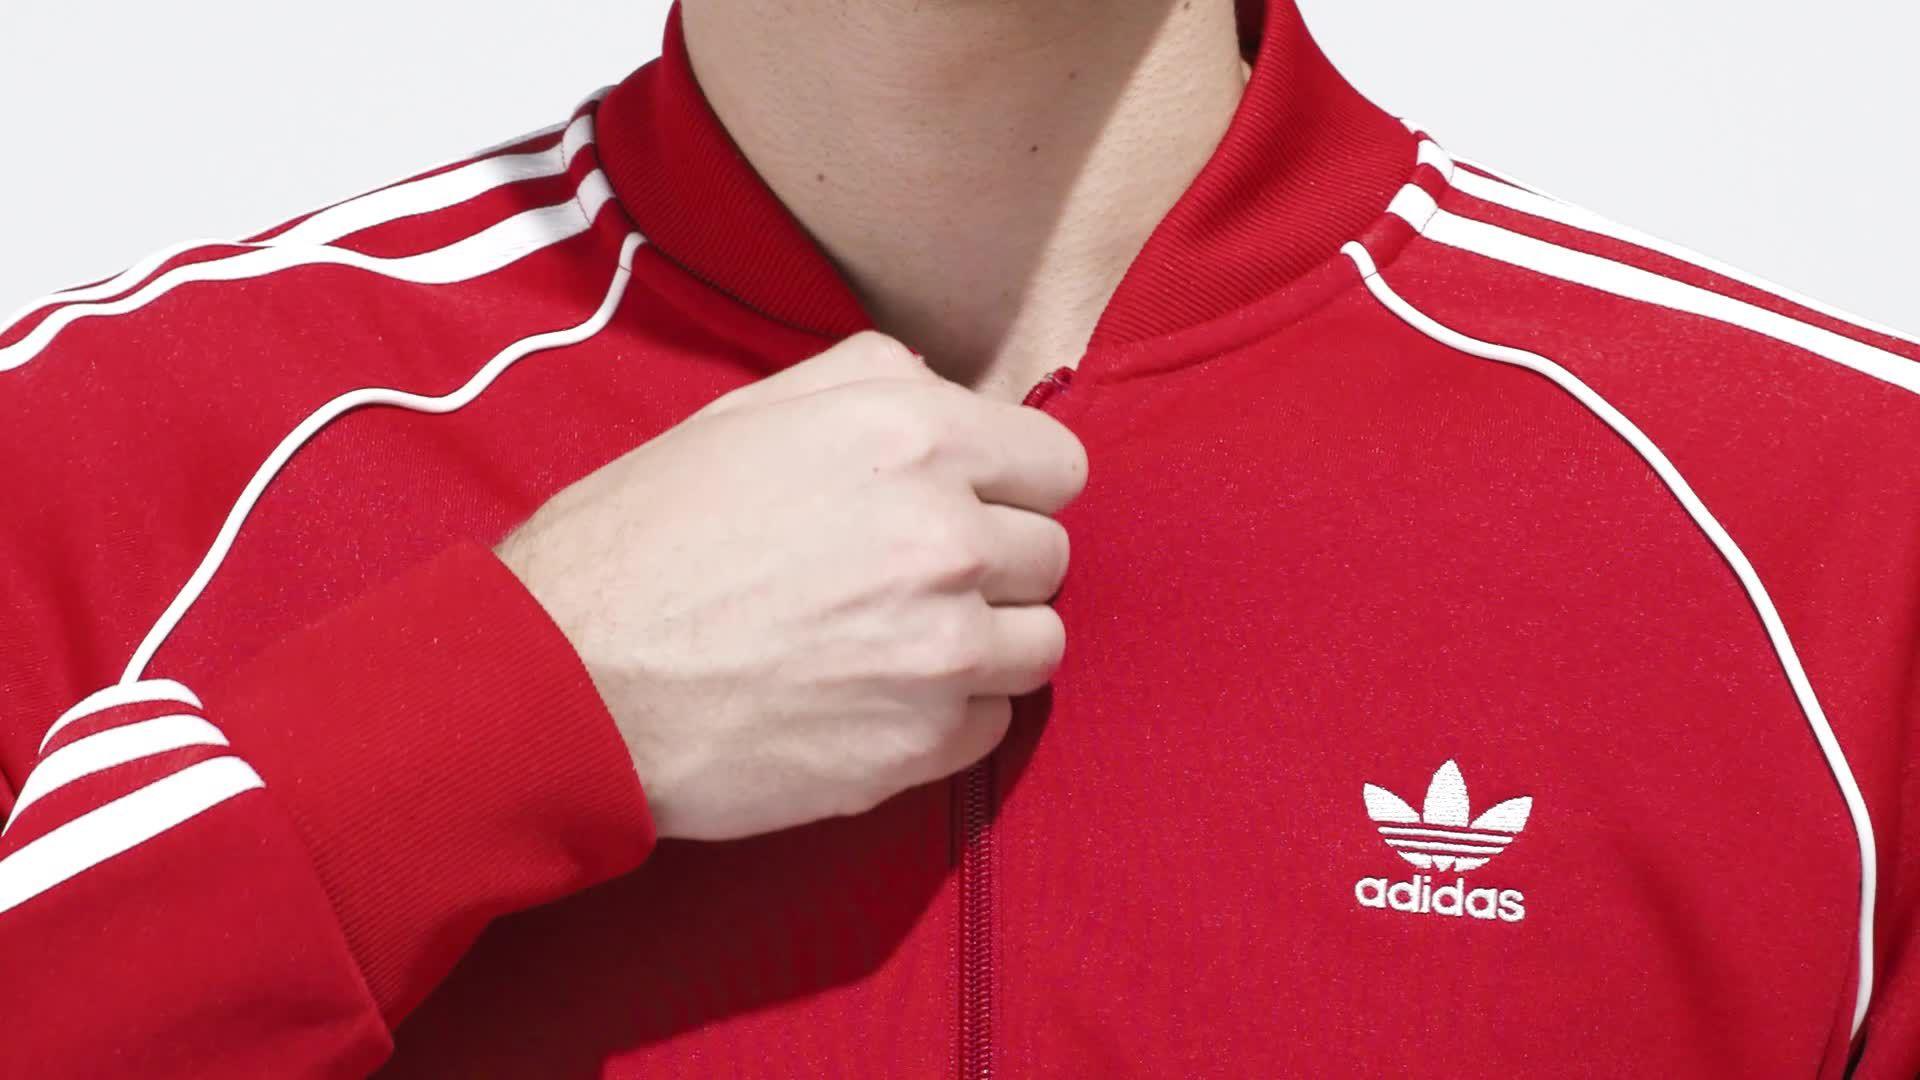 adidas Sst Track Jacket in Scarlet (Red) for Men | Lyst